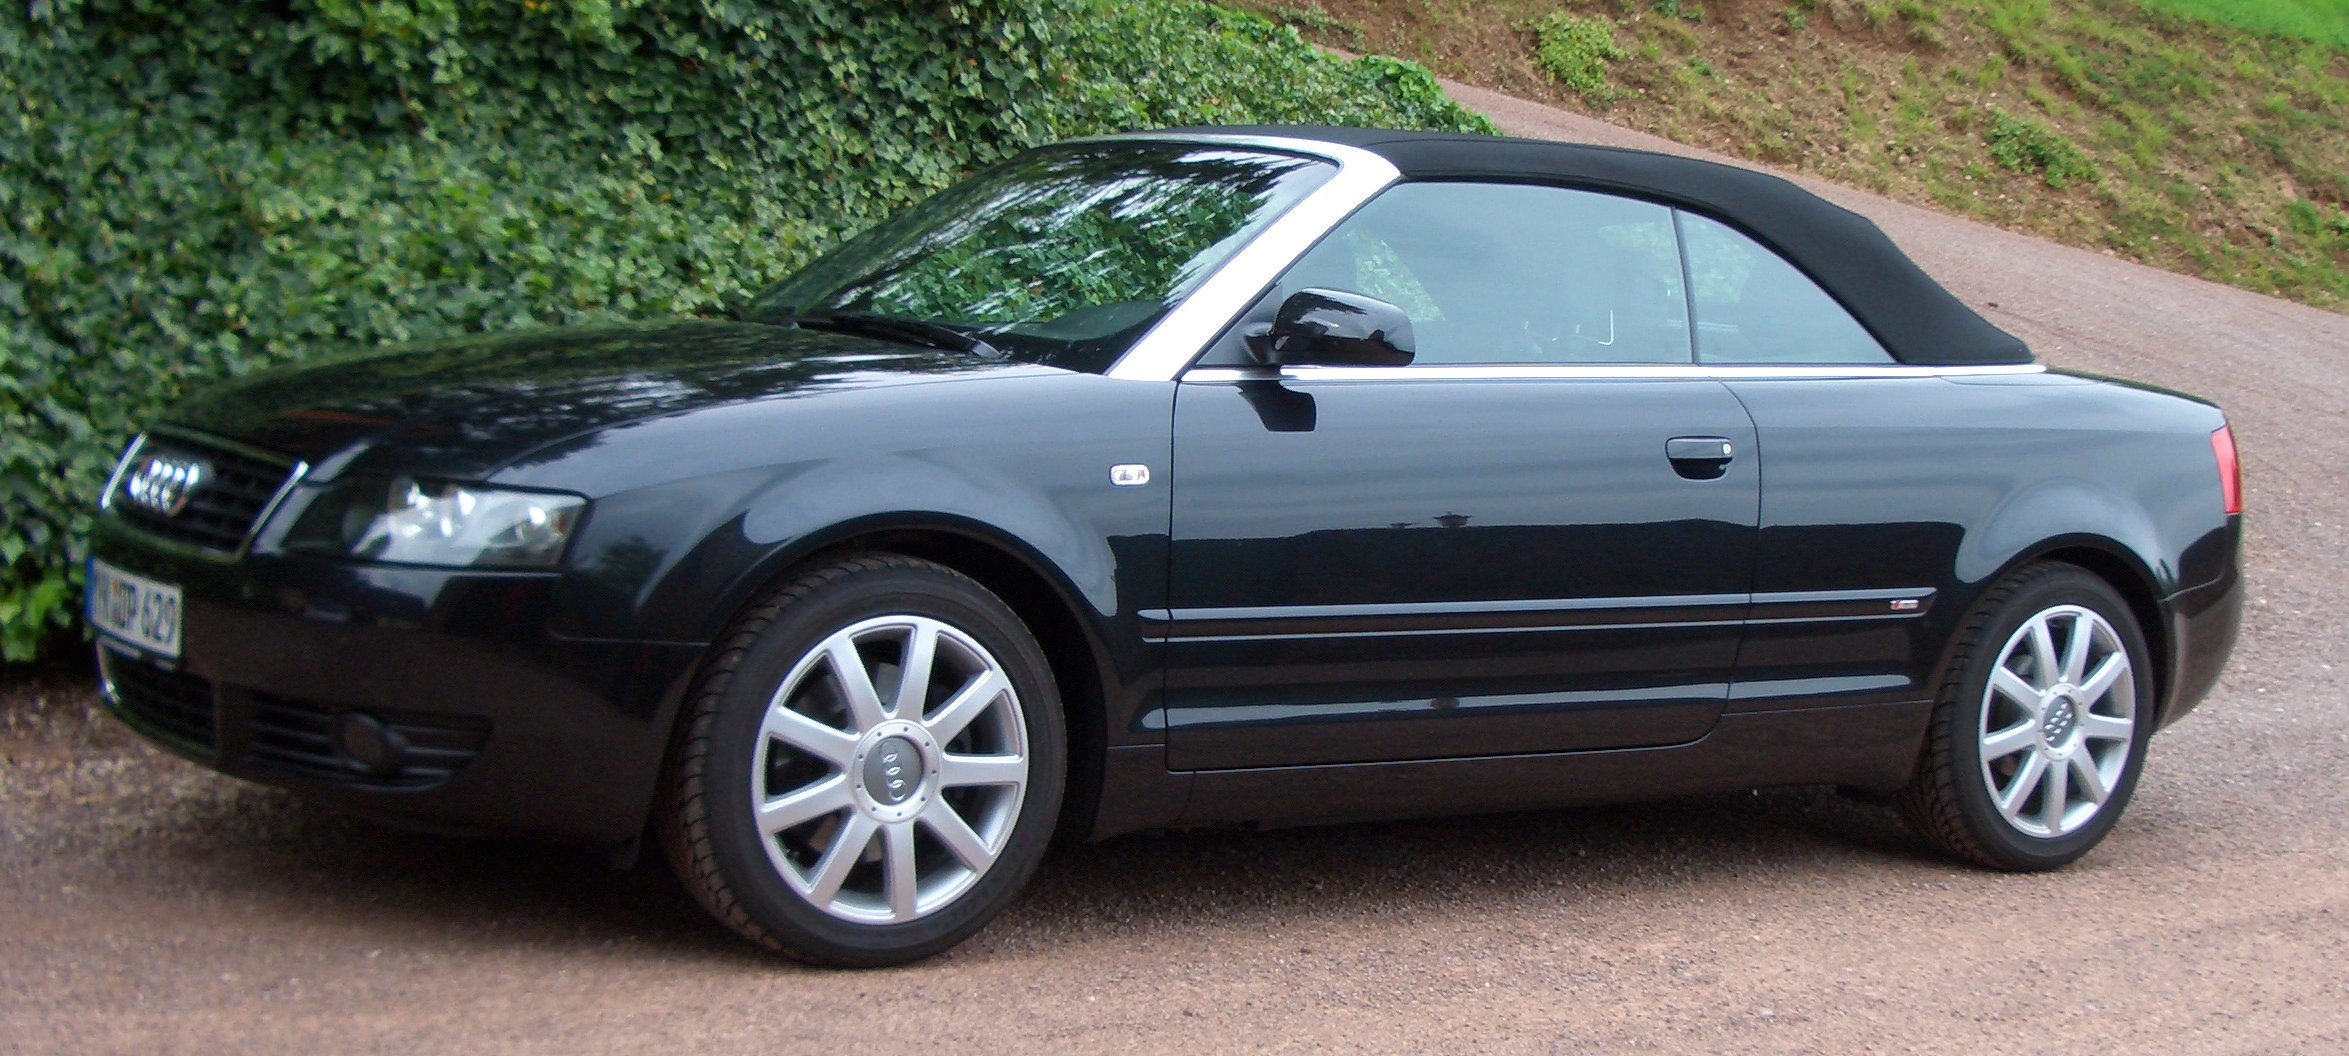 Audi A4 Cabriolet: 8 фото